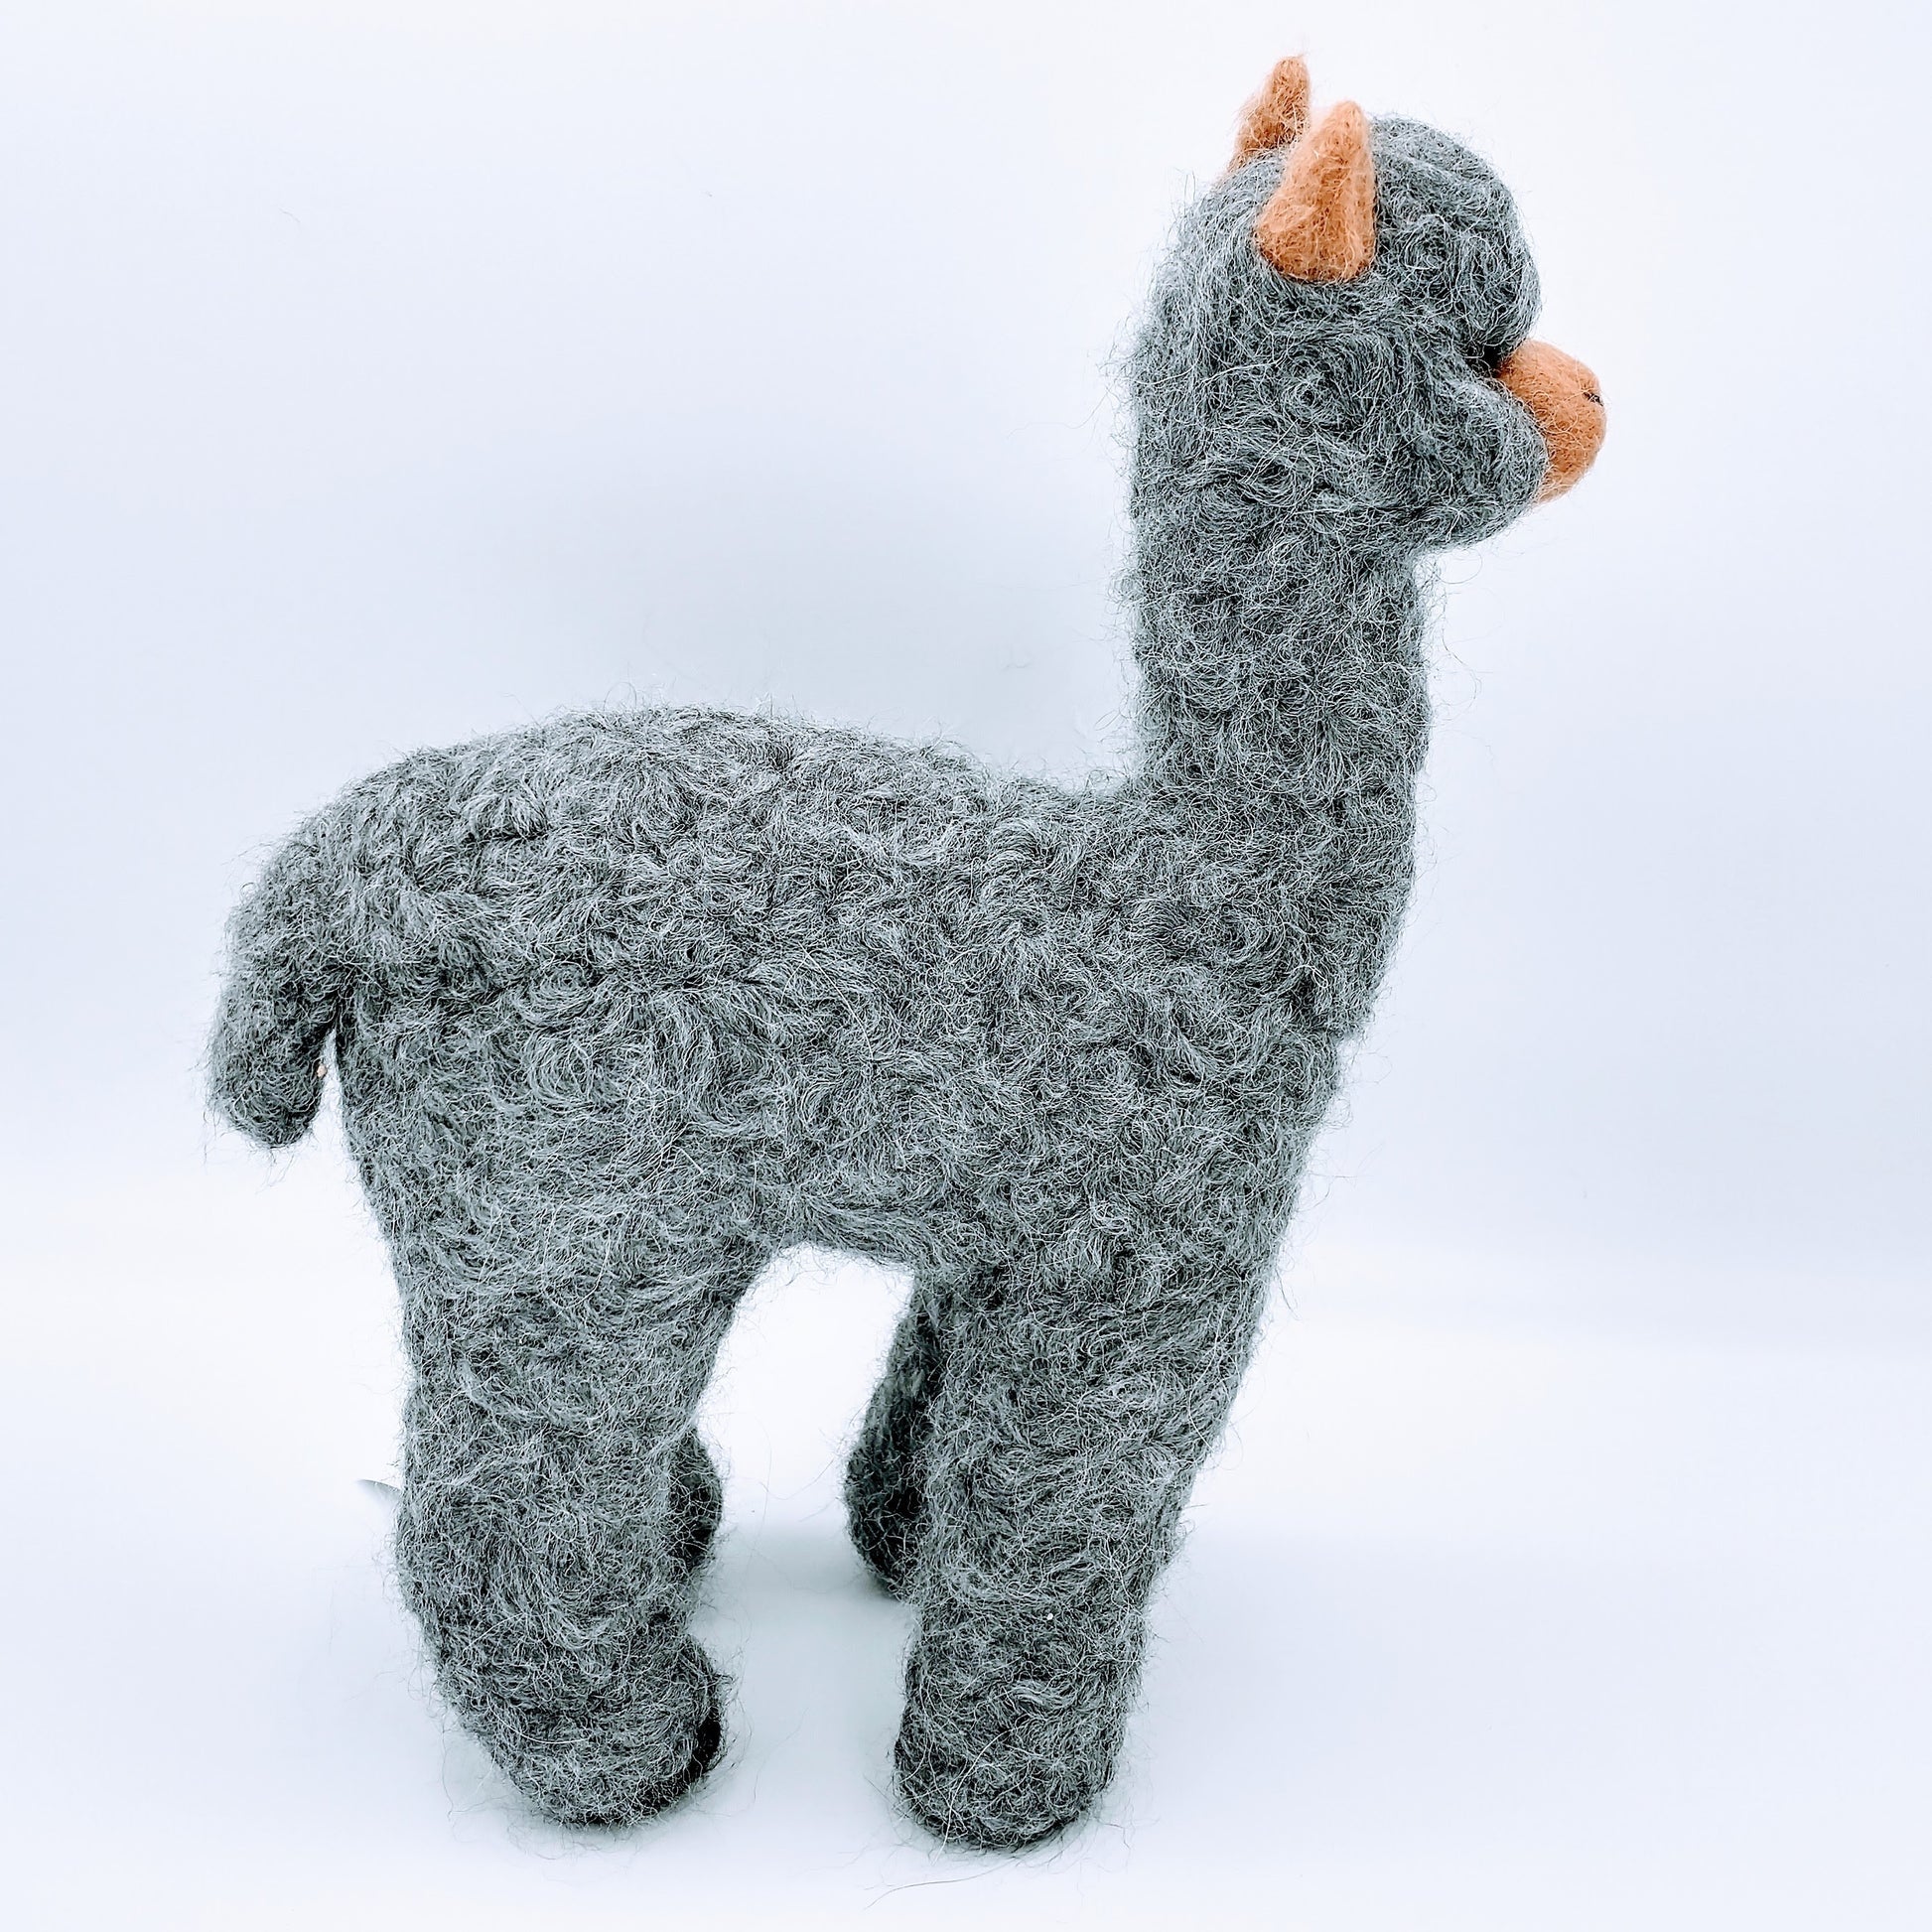 Herdsire 12″ Alpaca Fiber Sculpture gray